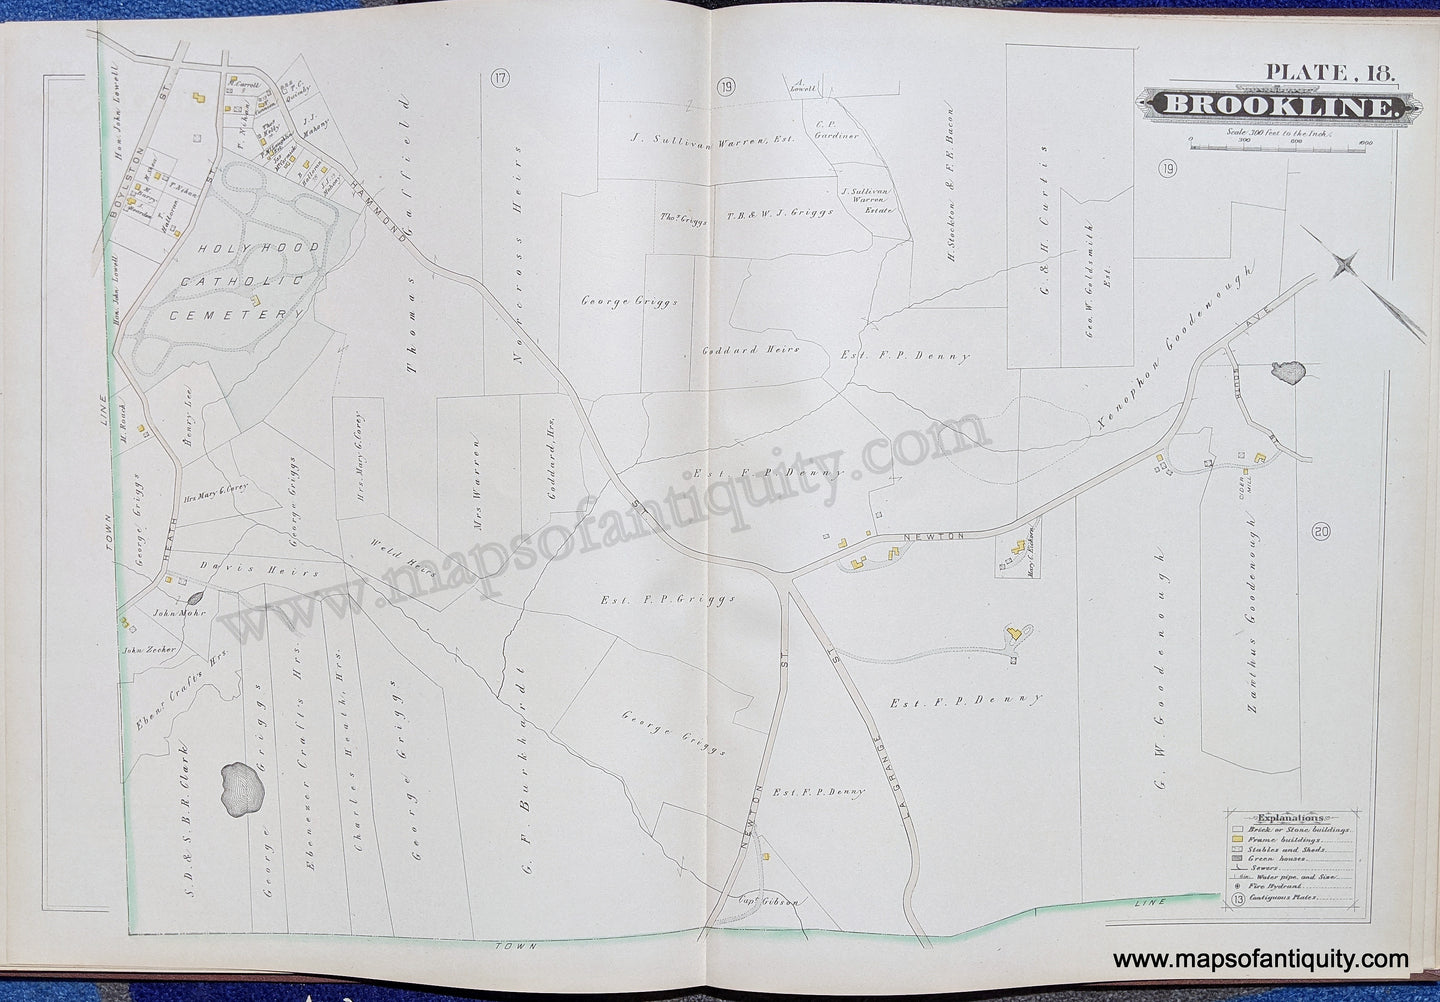 Antique-Map-Brookline-Mass.-Plate-18-United-States-Massachusetts-1884-Hopkins-Maps-Of-Antiquity-1800s-19th-century